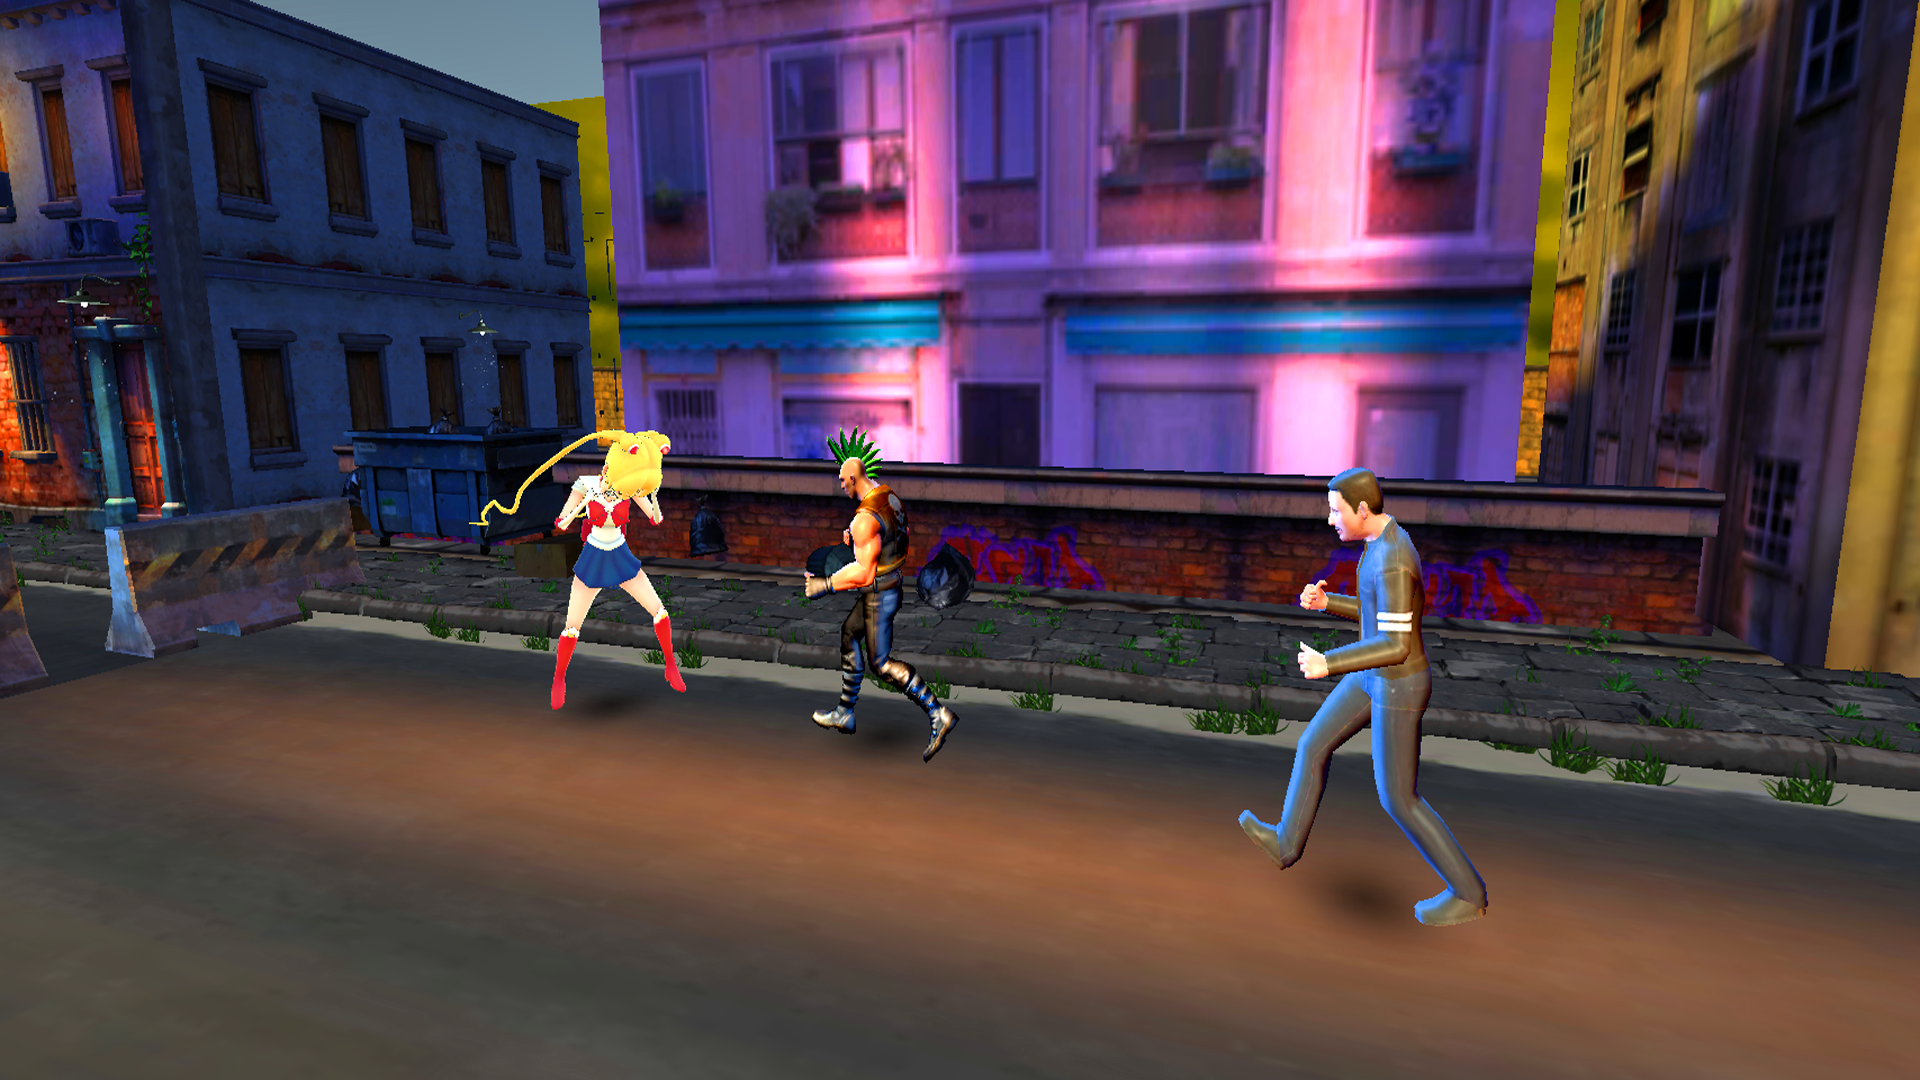 Screenshot 1 of เกมส์ต่อสู้เซเลอร์มูน 1.0